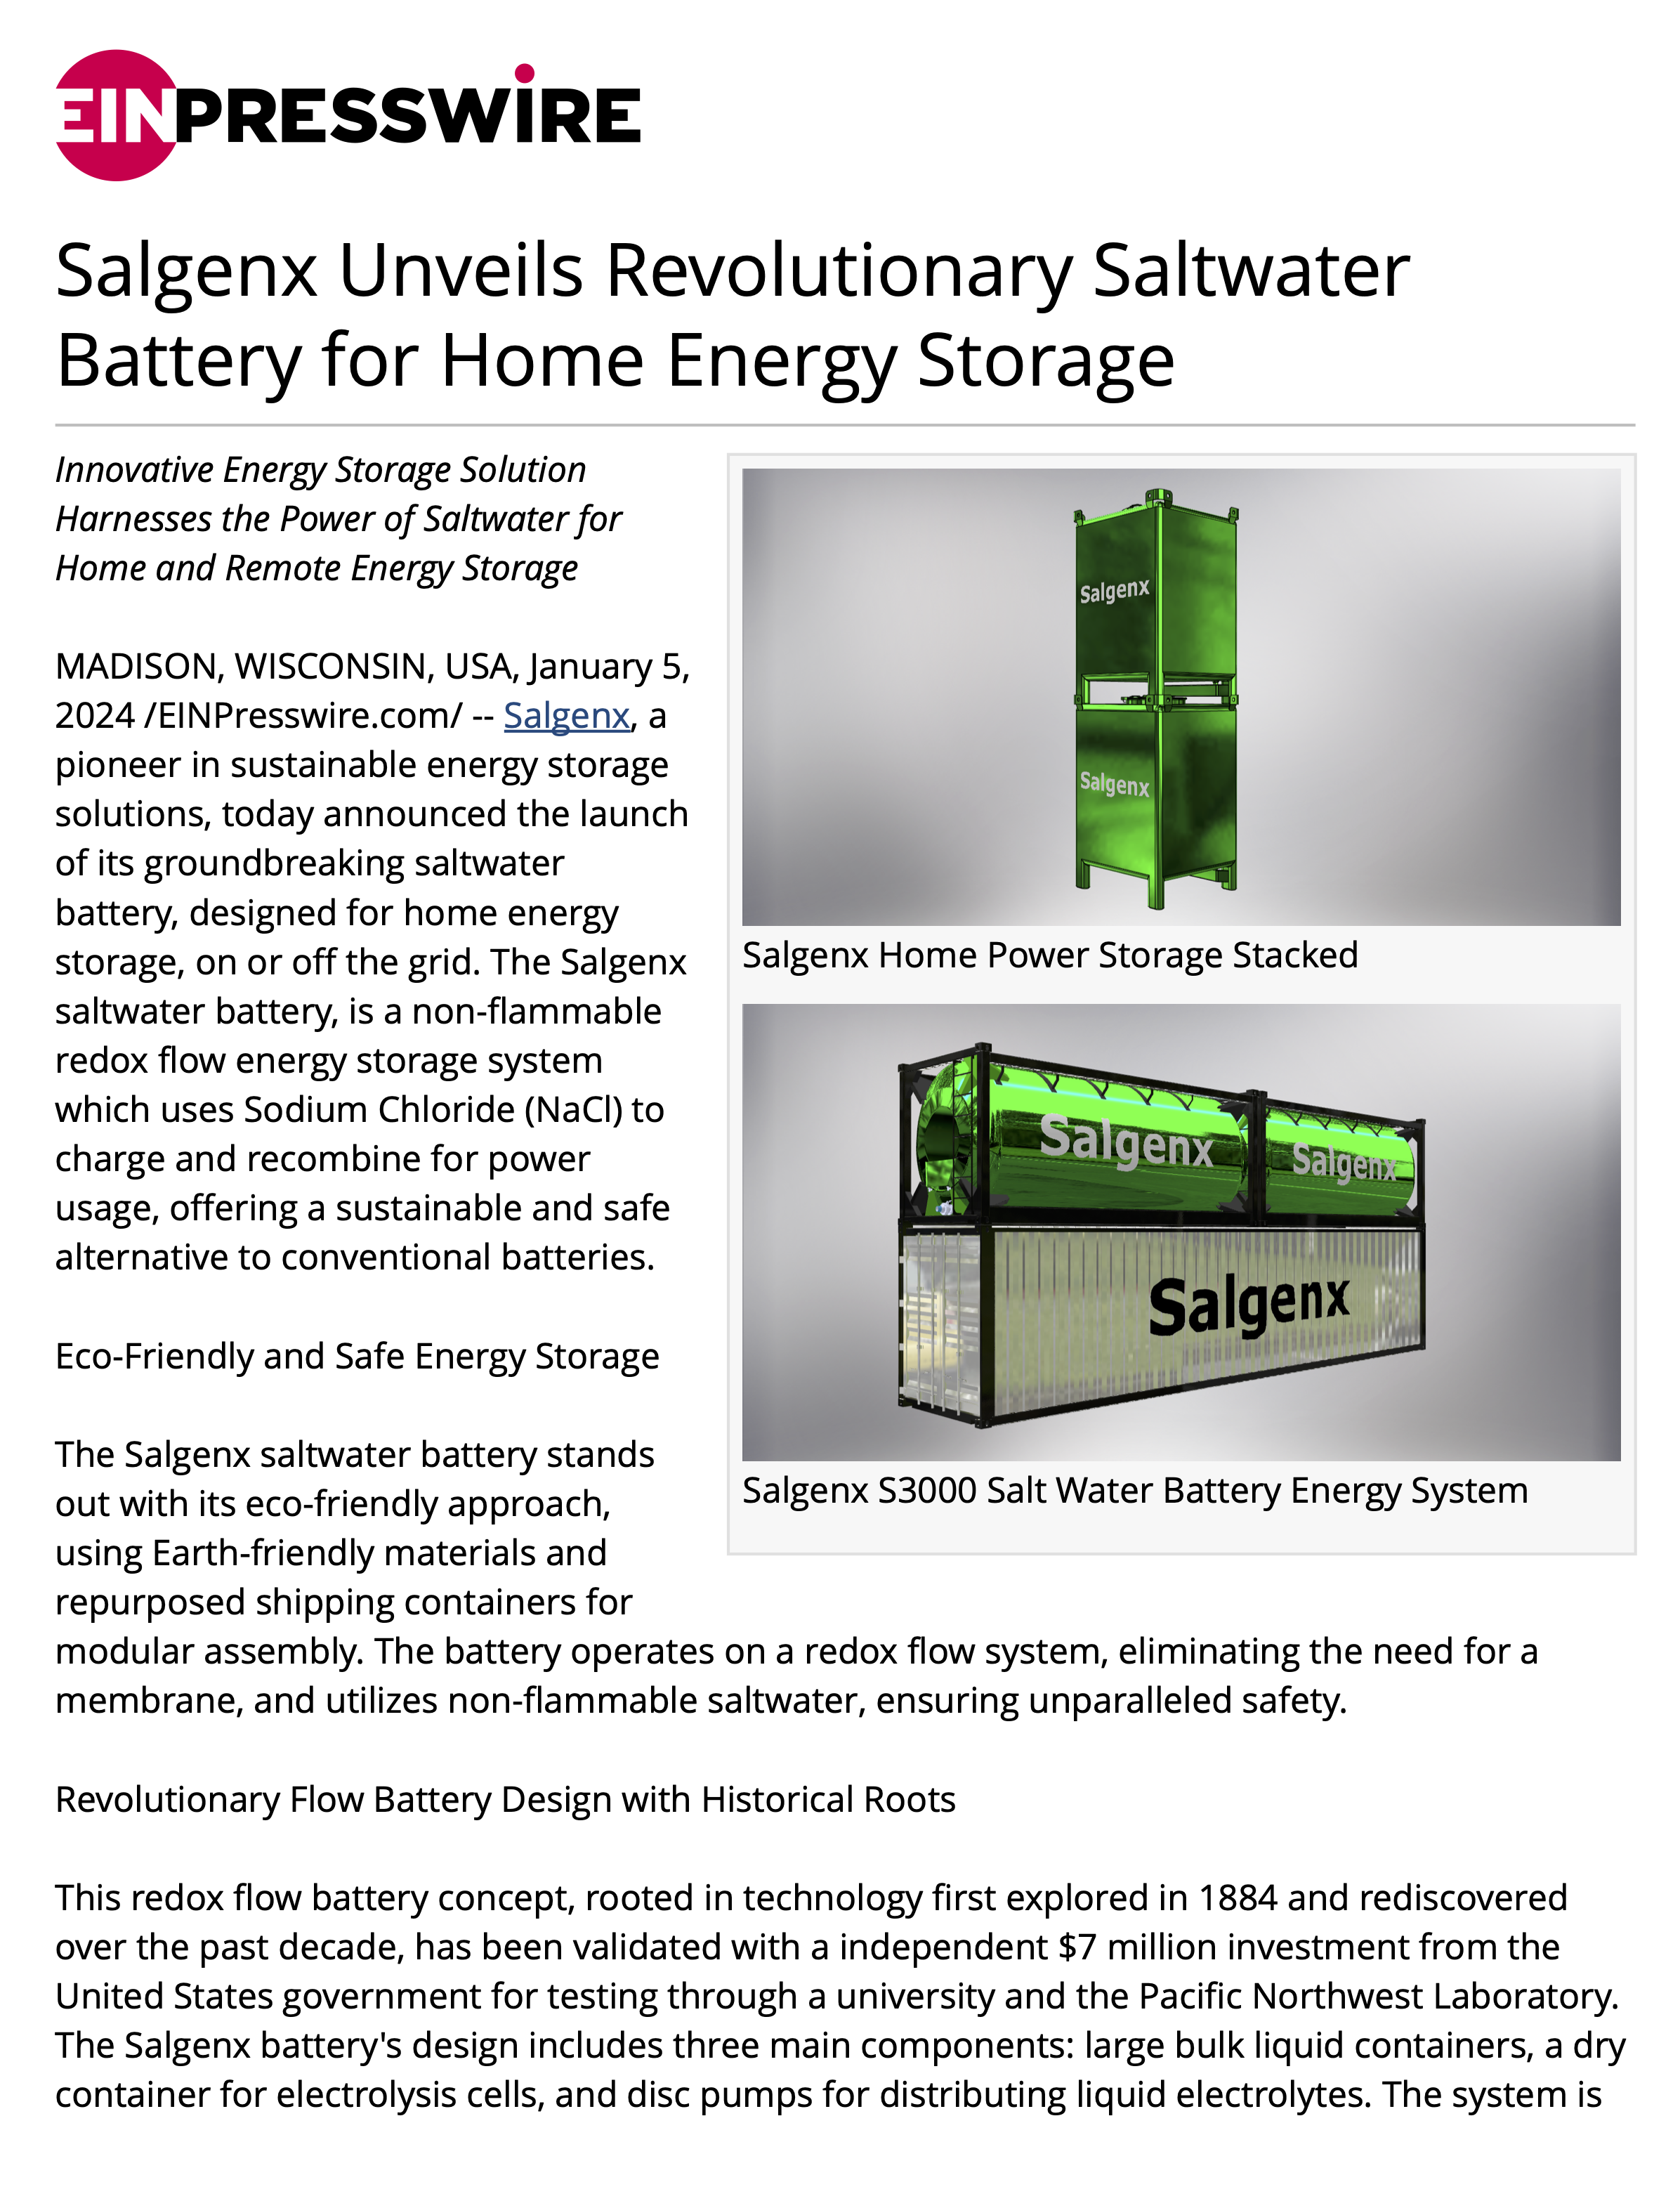 Salgenx Unveils Revolutionary Saltwater Battery for Home Energy Storage